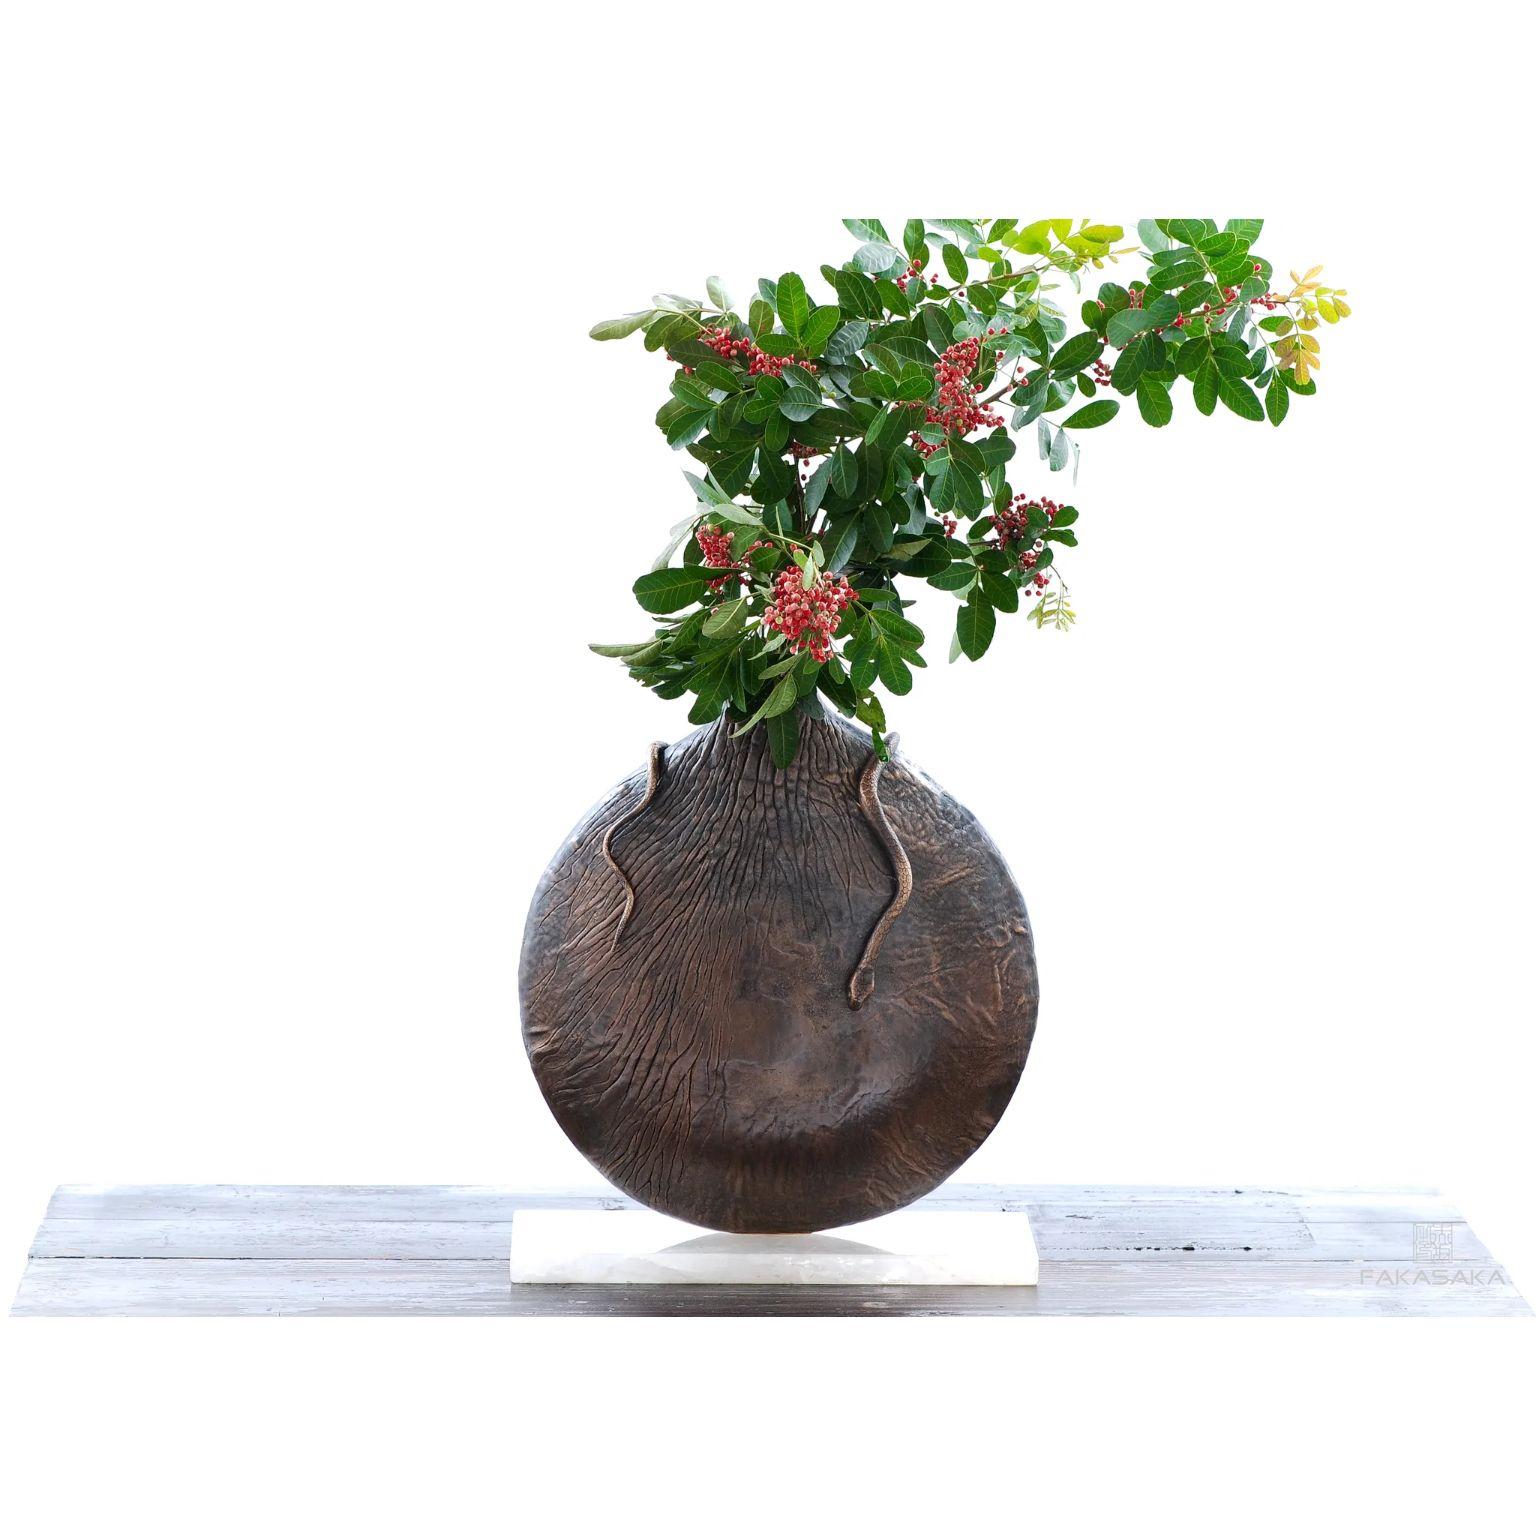 Contemporary Supert Vase by Fakasaka Design For Sale